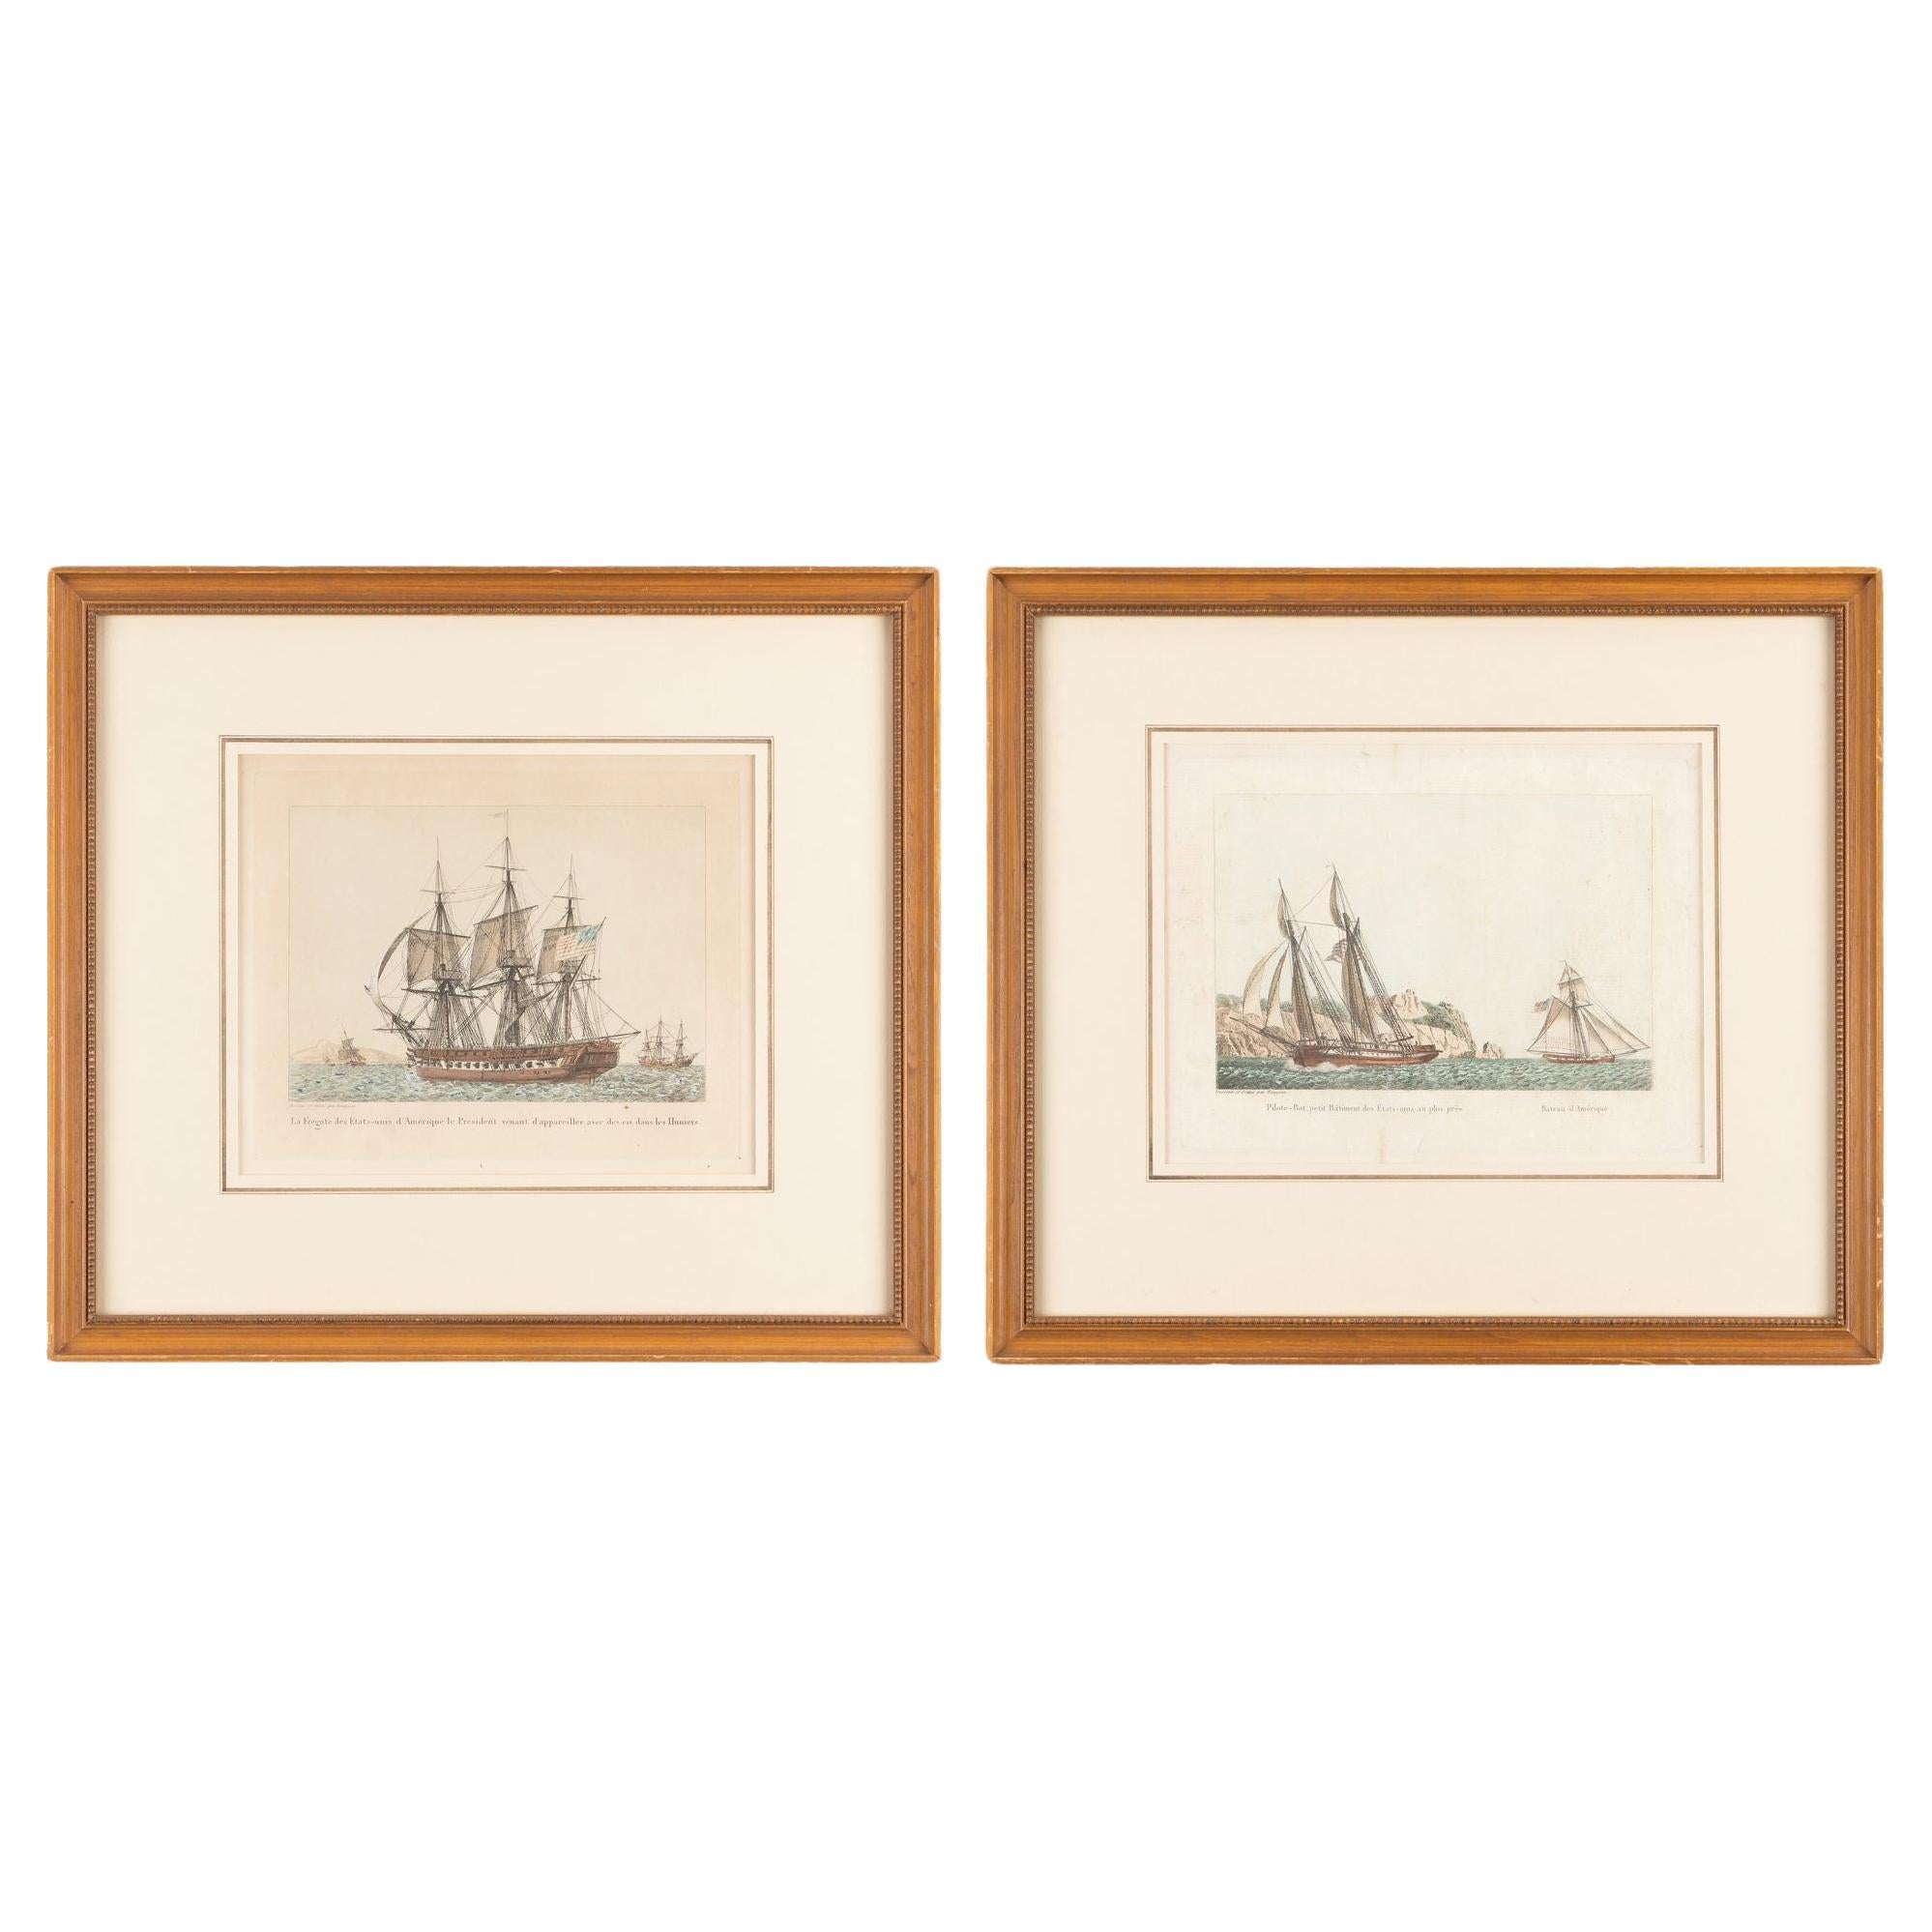 Pair of colored engravings of American ships by Jean-Jerome Baugean, c. 1840